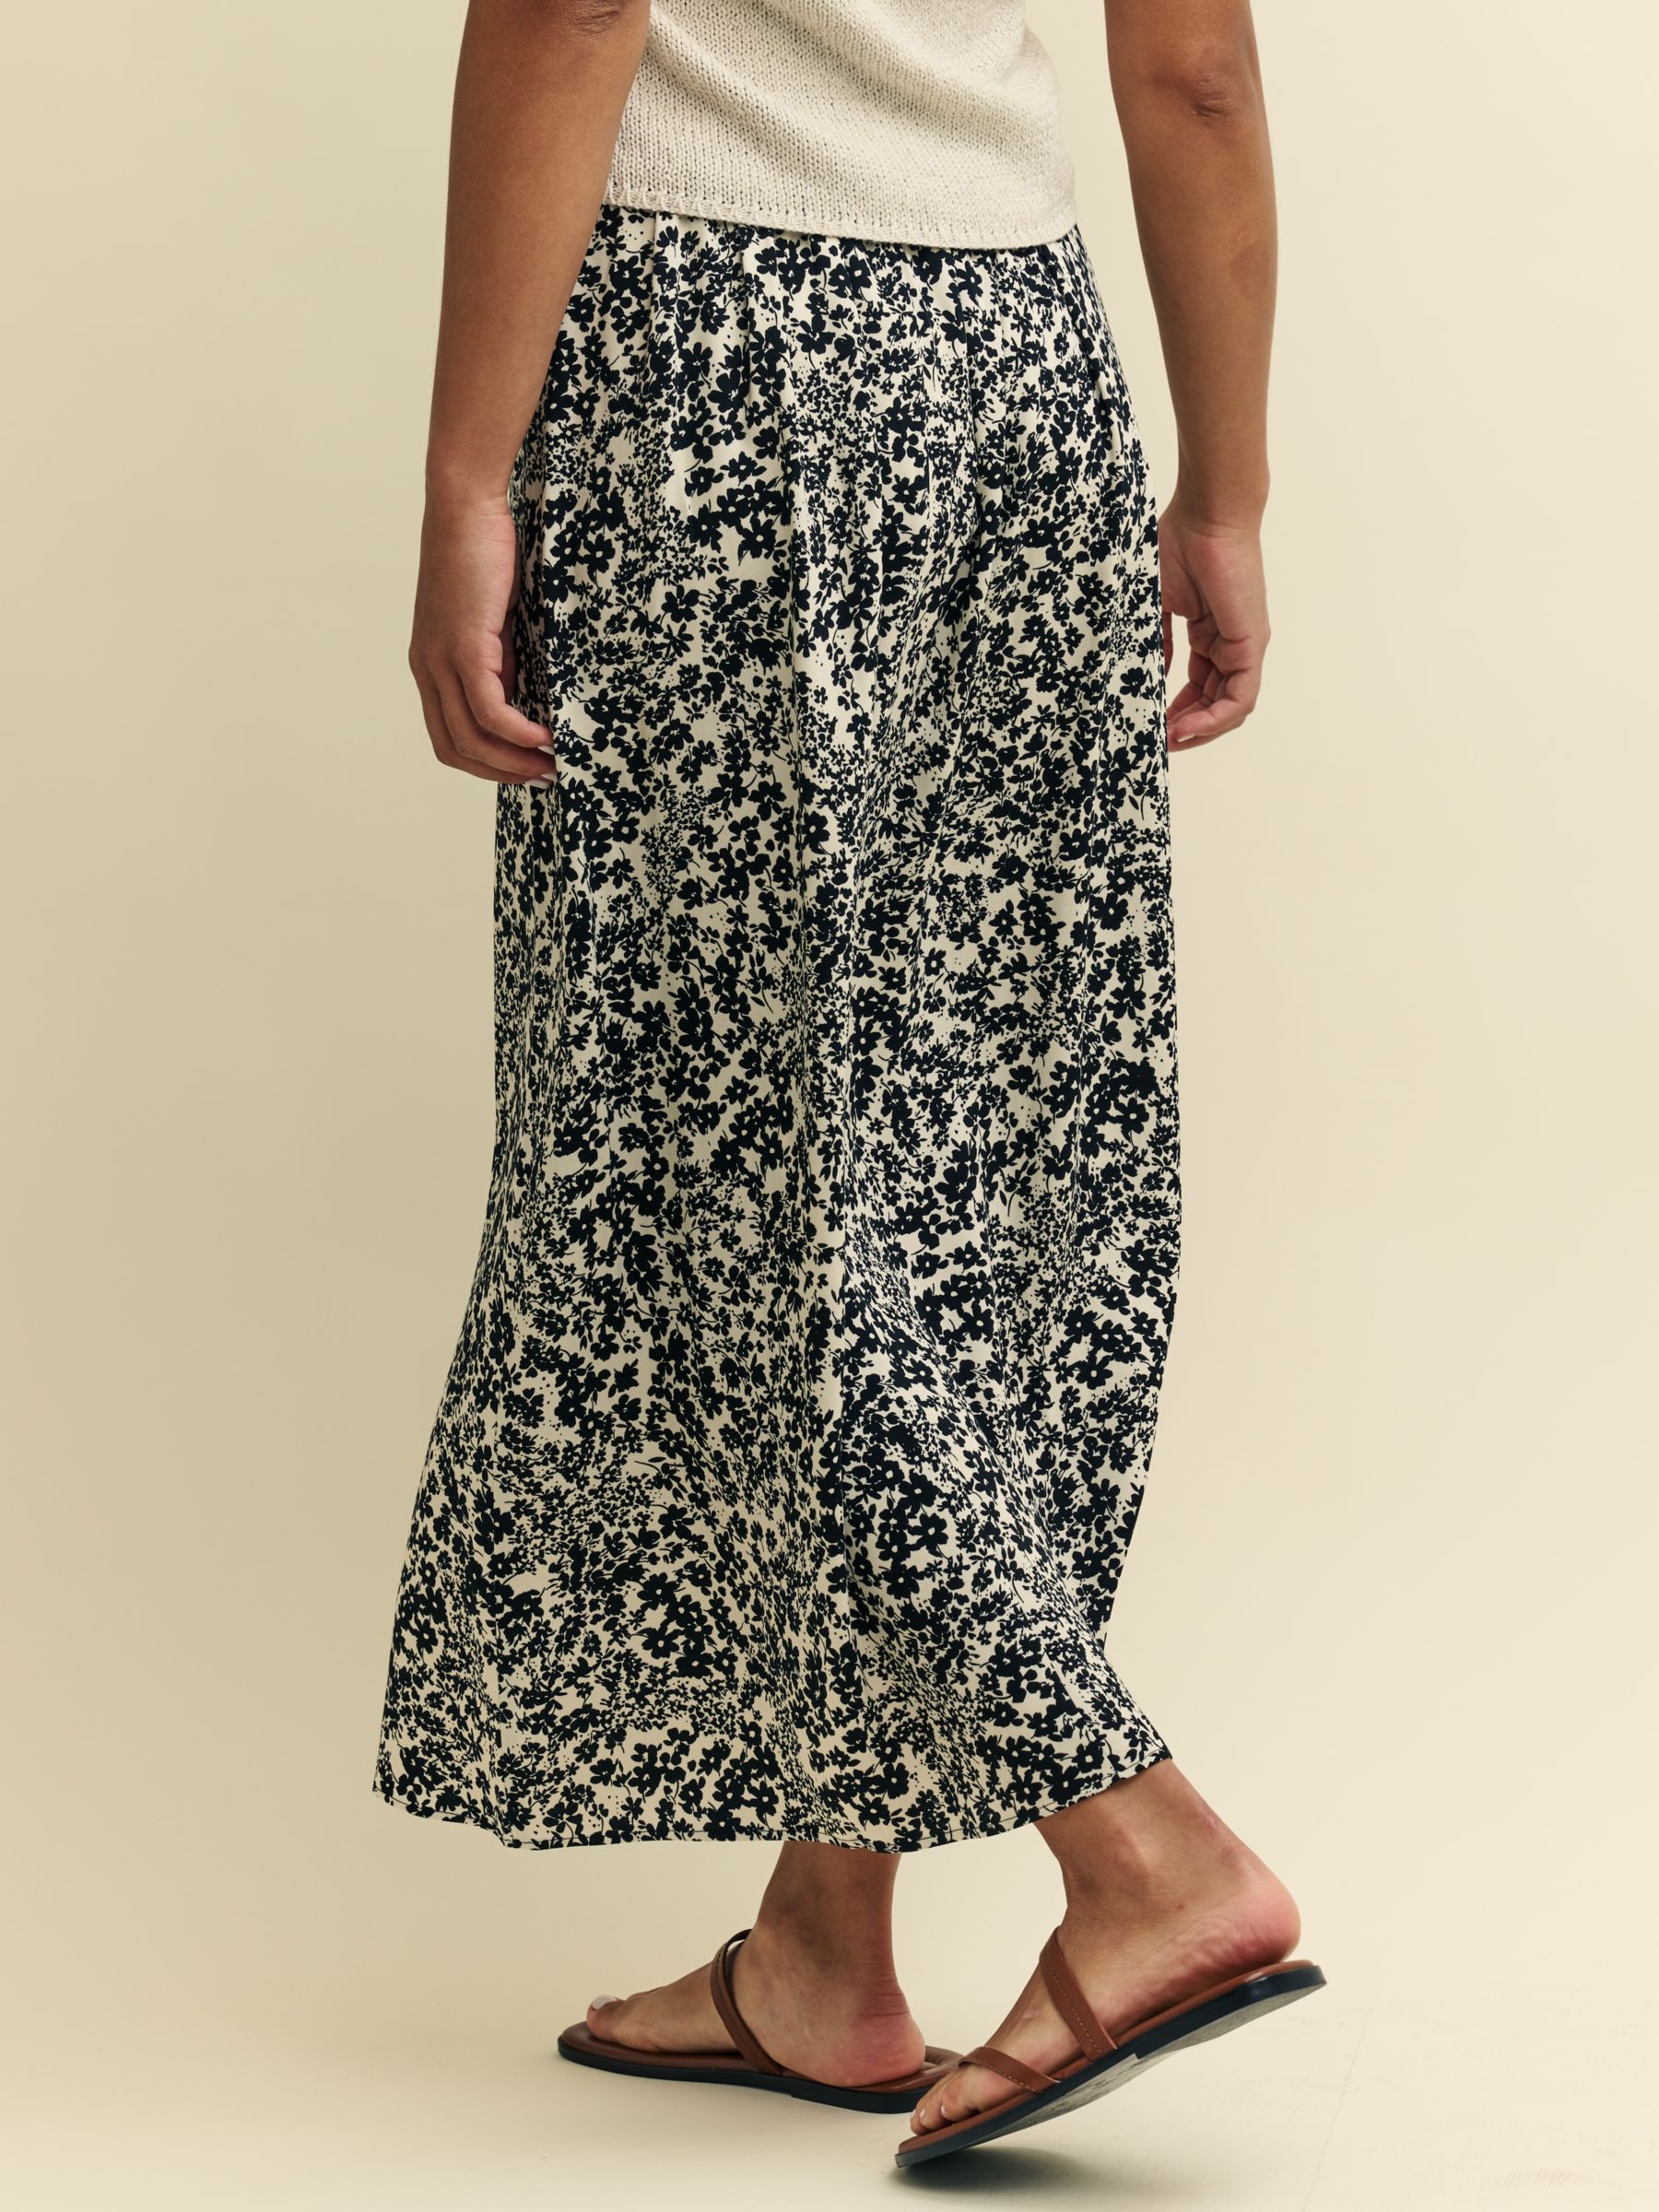 Nobody's Child Monie Leopard Ditsy Print Midaxi Skirt, Black/Multi, 6